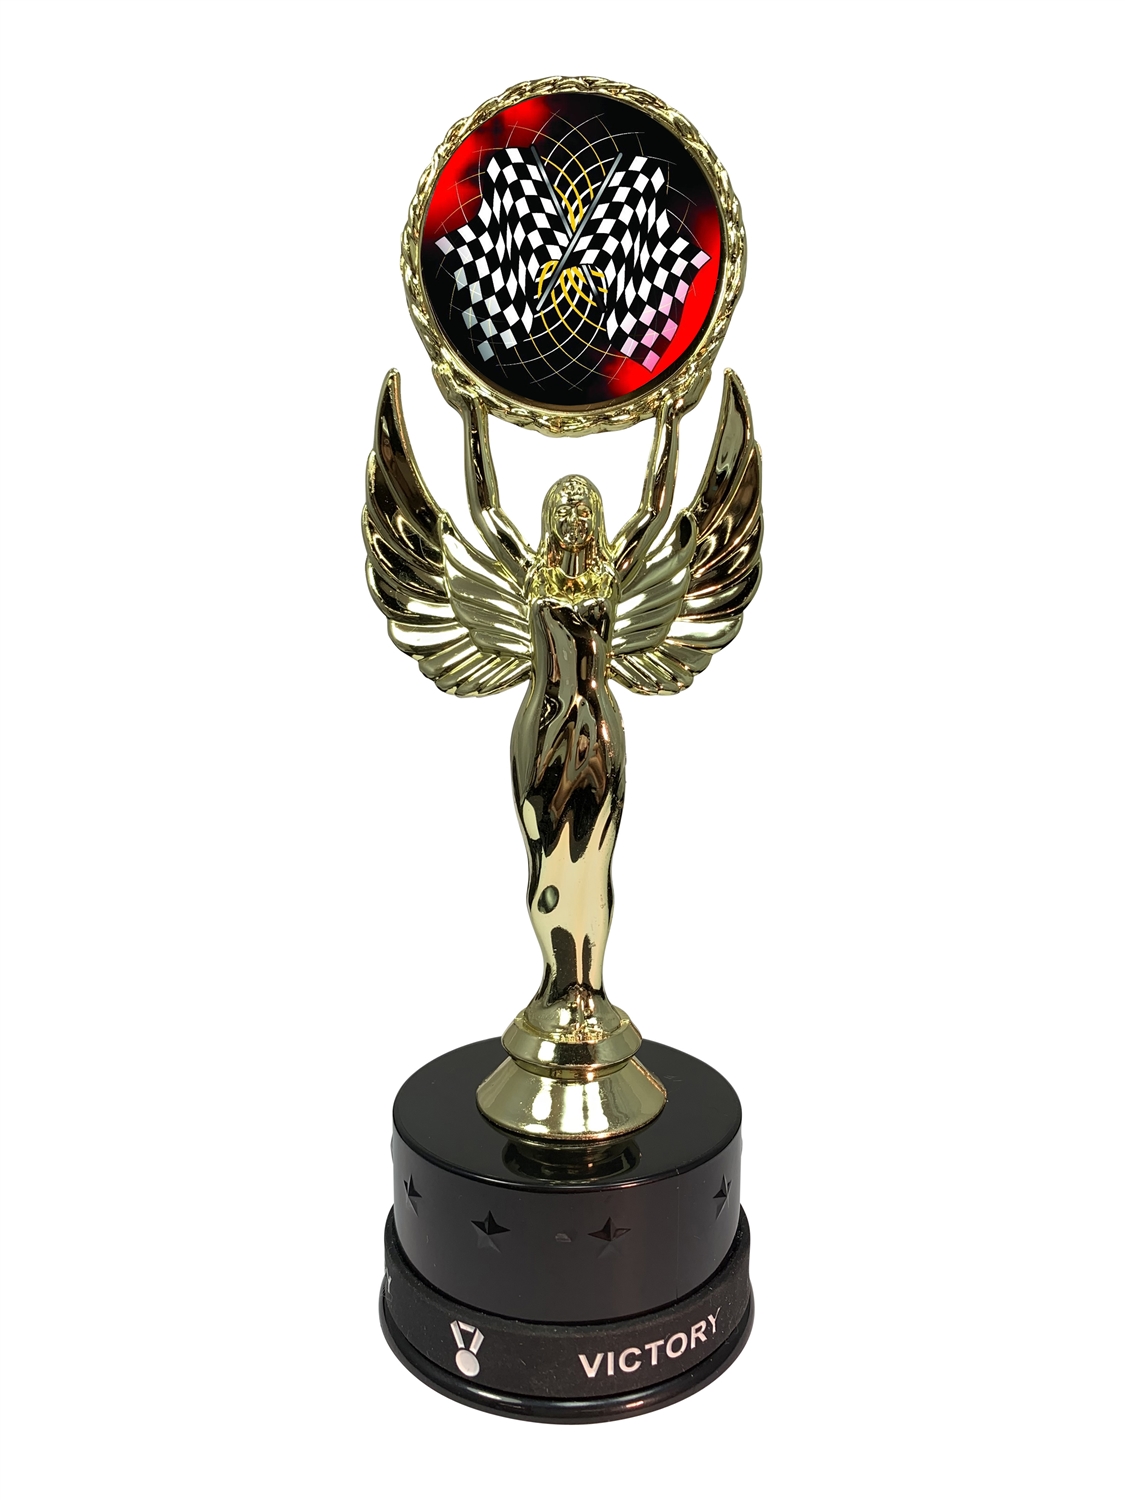 Racing trophies